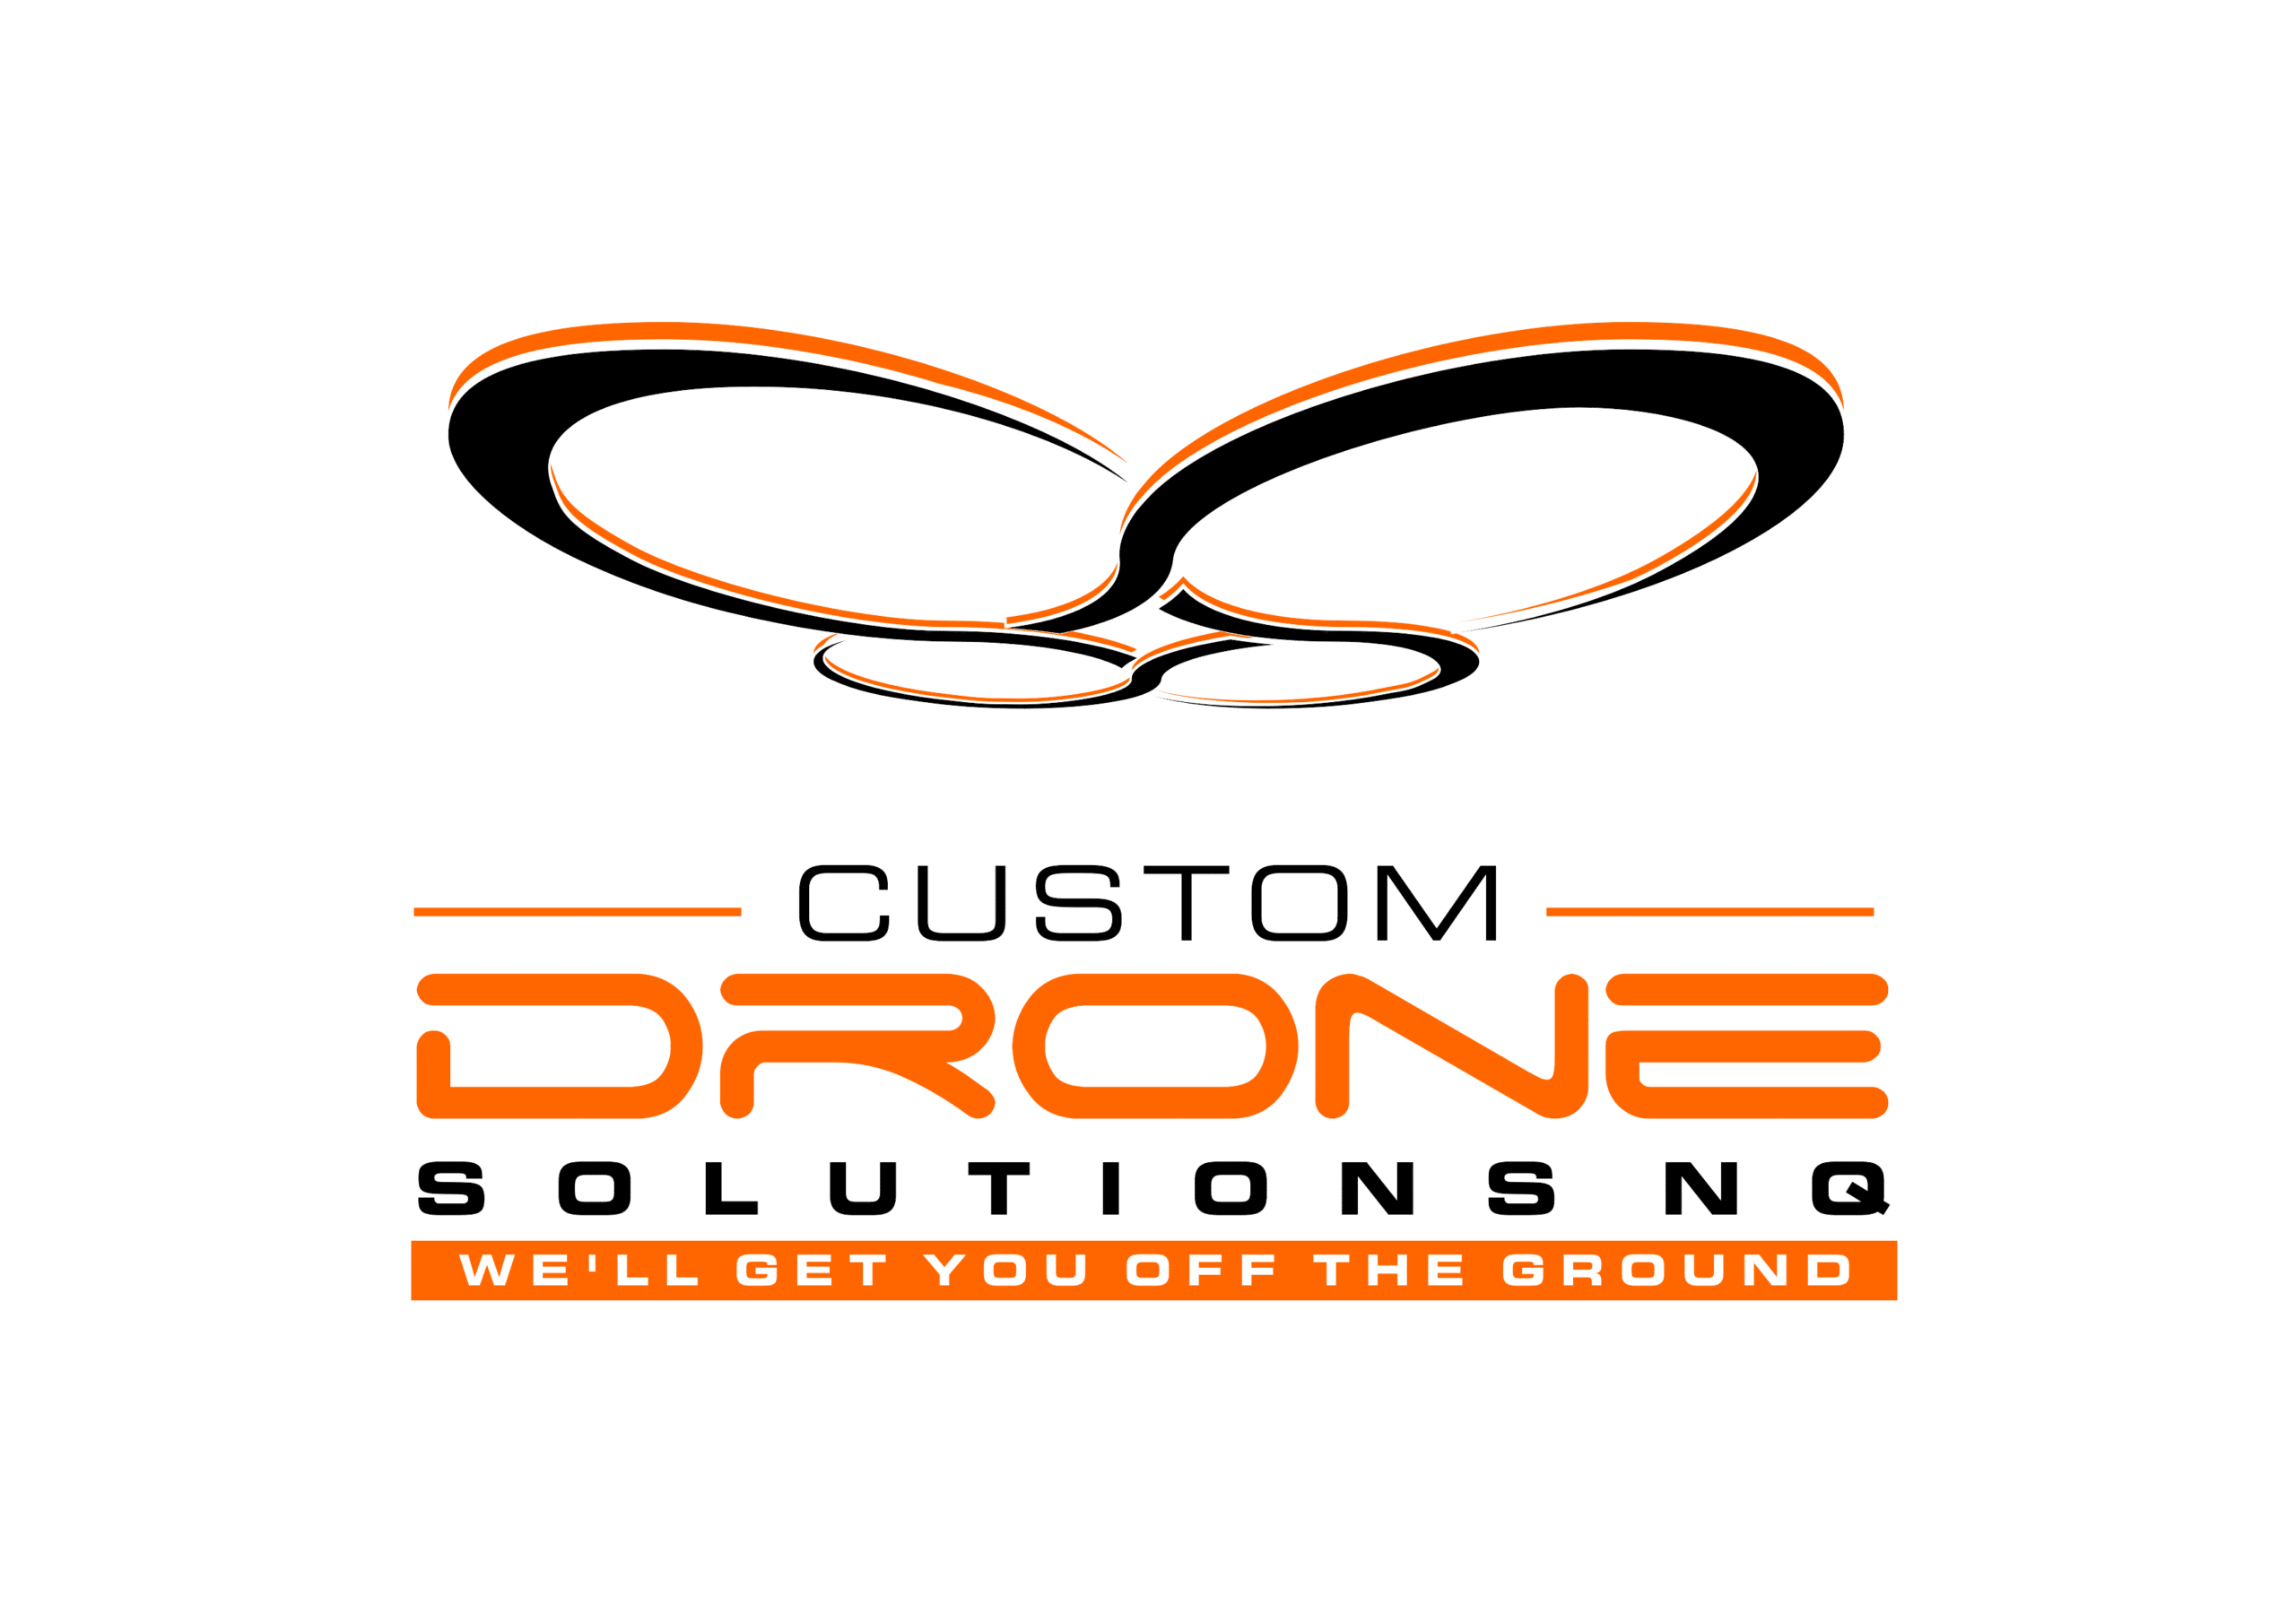 Custom Drone Solutions NQ